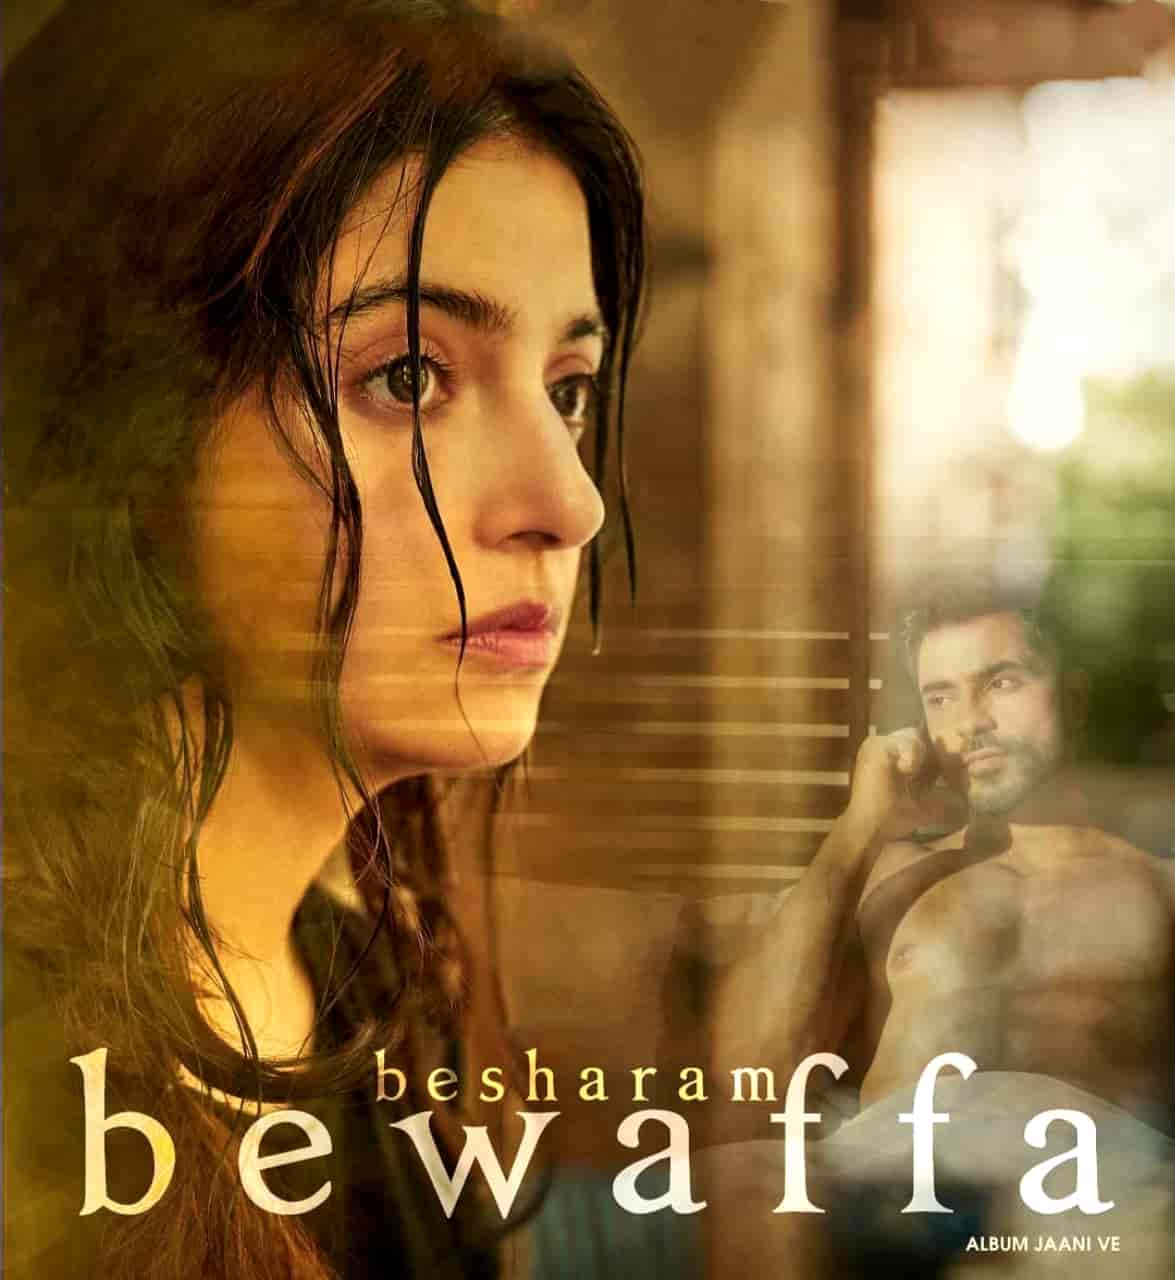 Besharam Bewaffa Hindi Song Image Features Divya Khosla Kumar